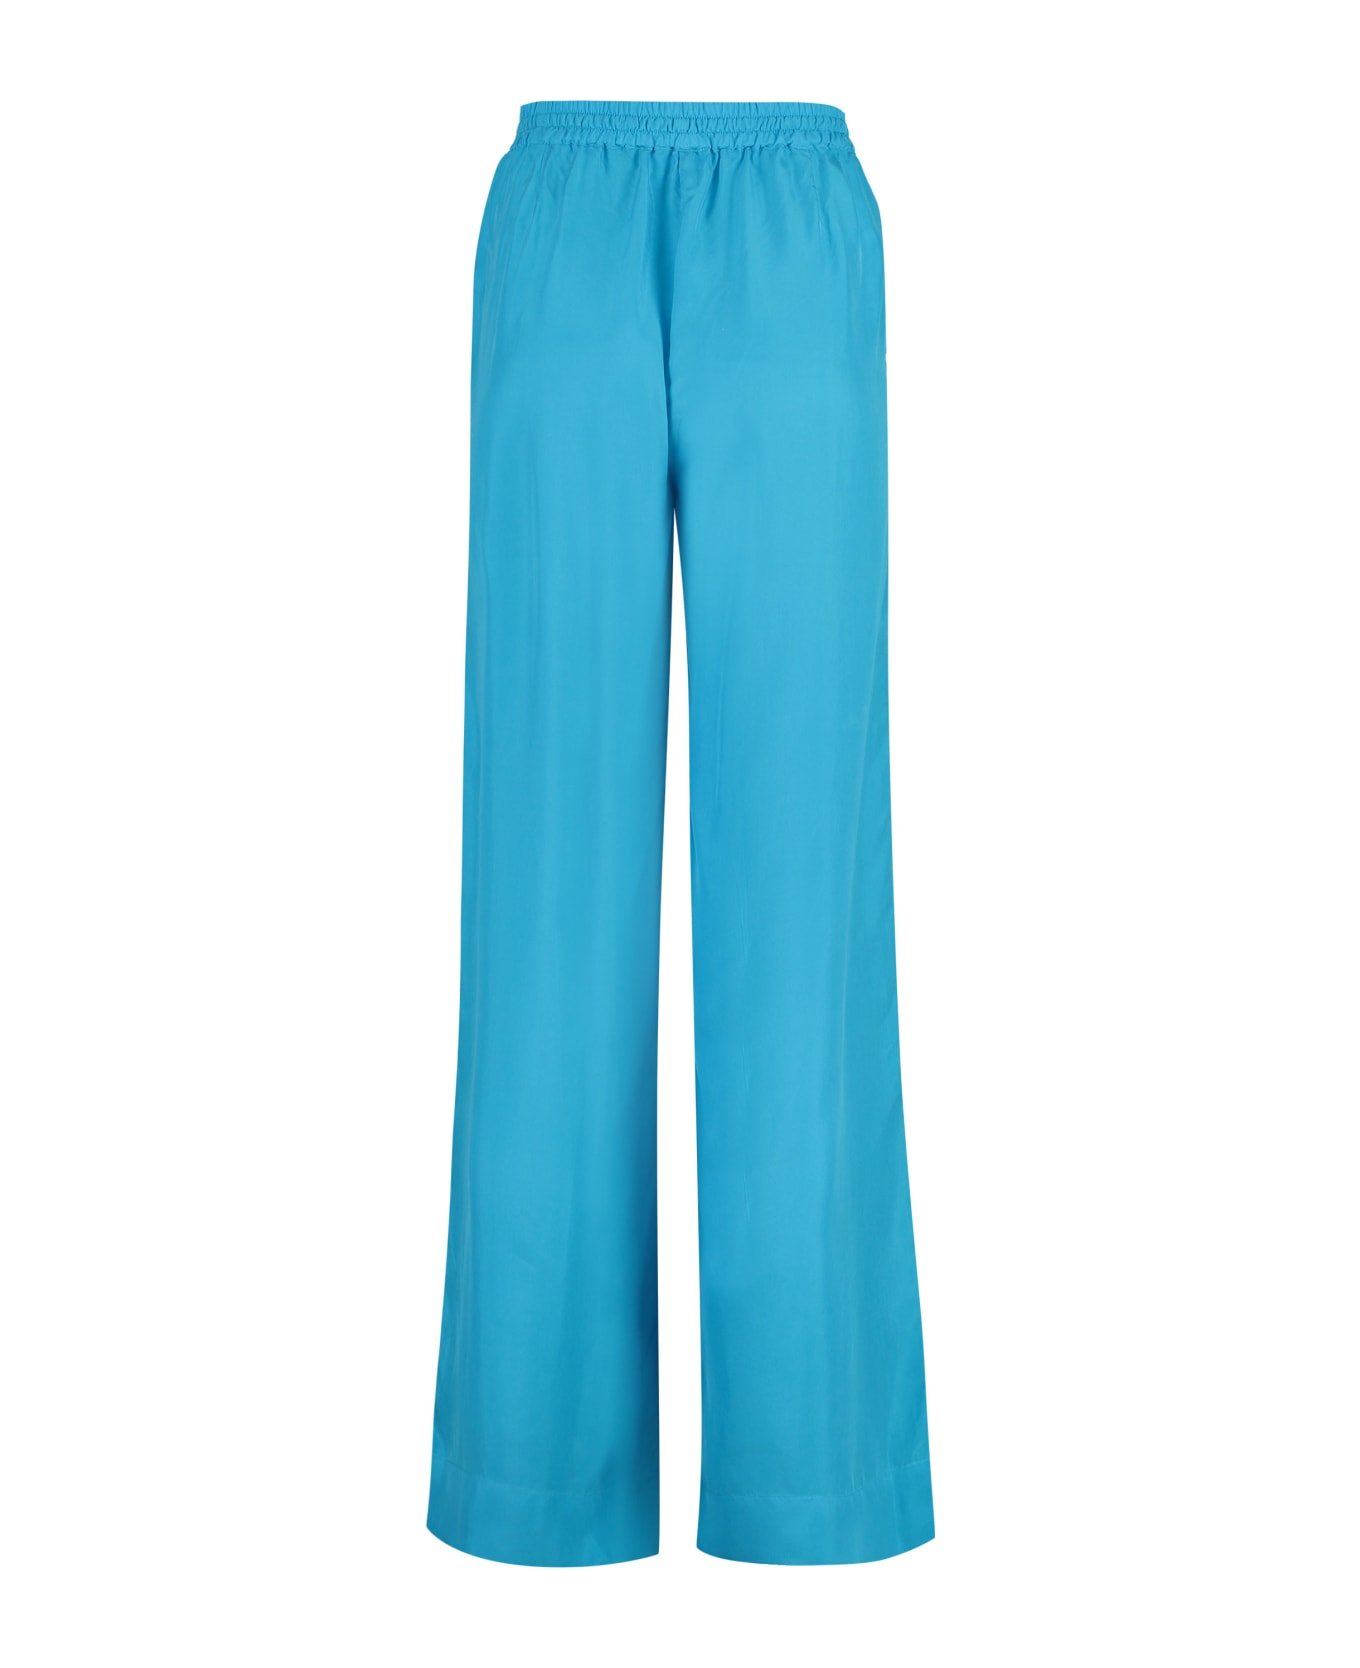 Parosh Silk Maxi Skirt - turquoise スカート